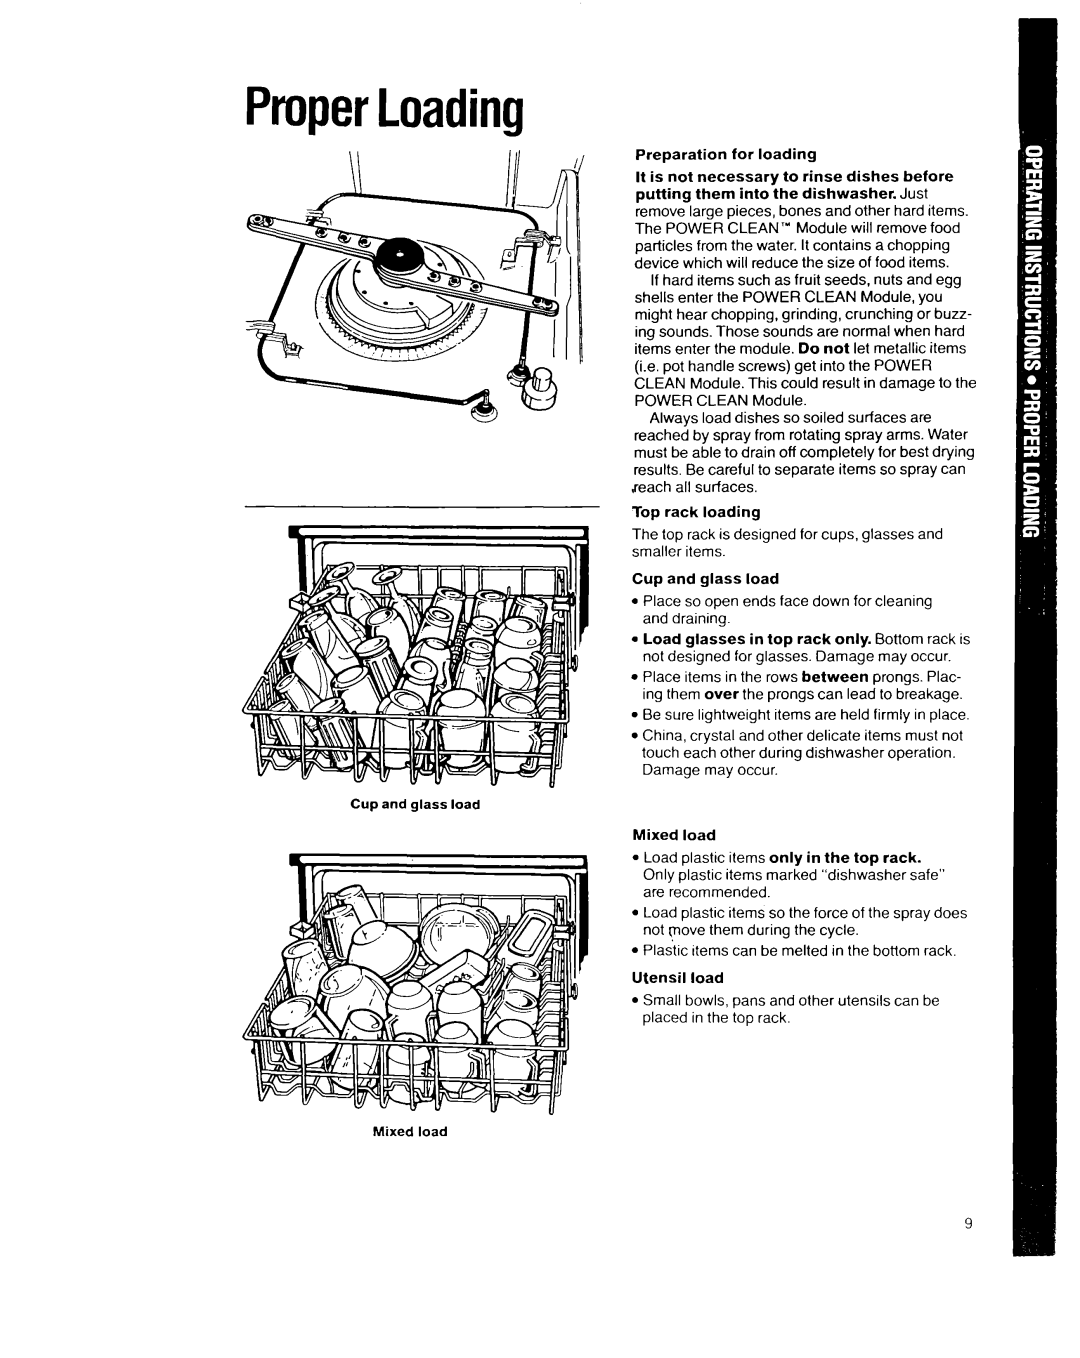 Whirlpool 8700 Series manual ProperLoading 